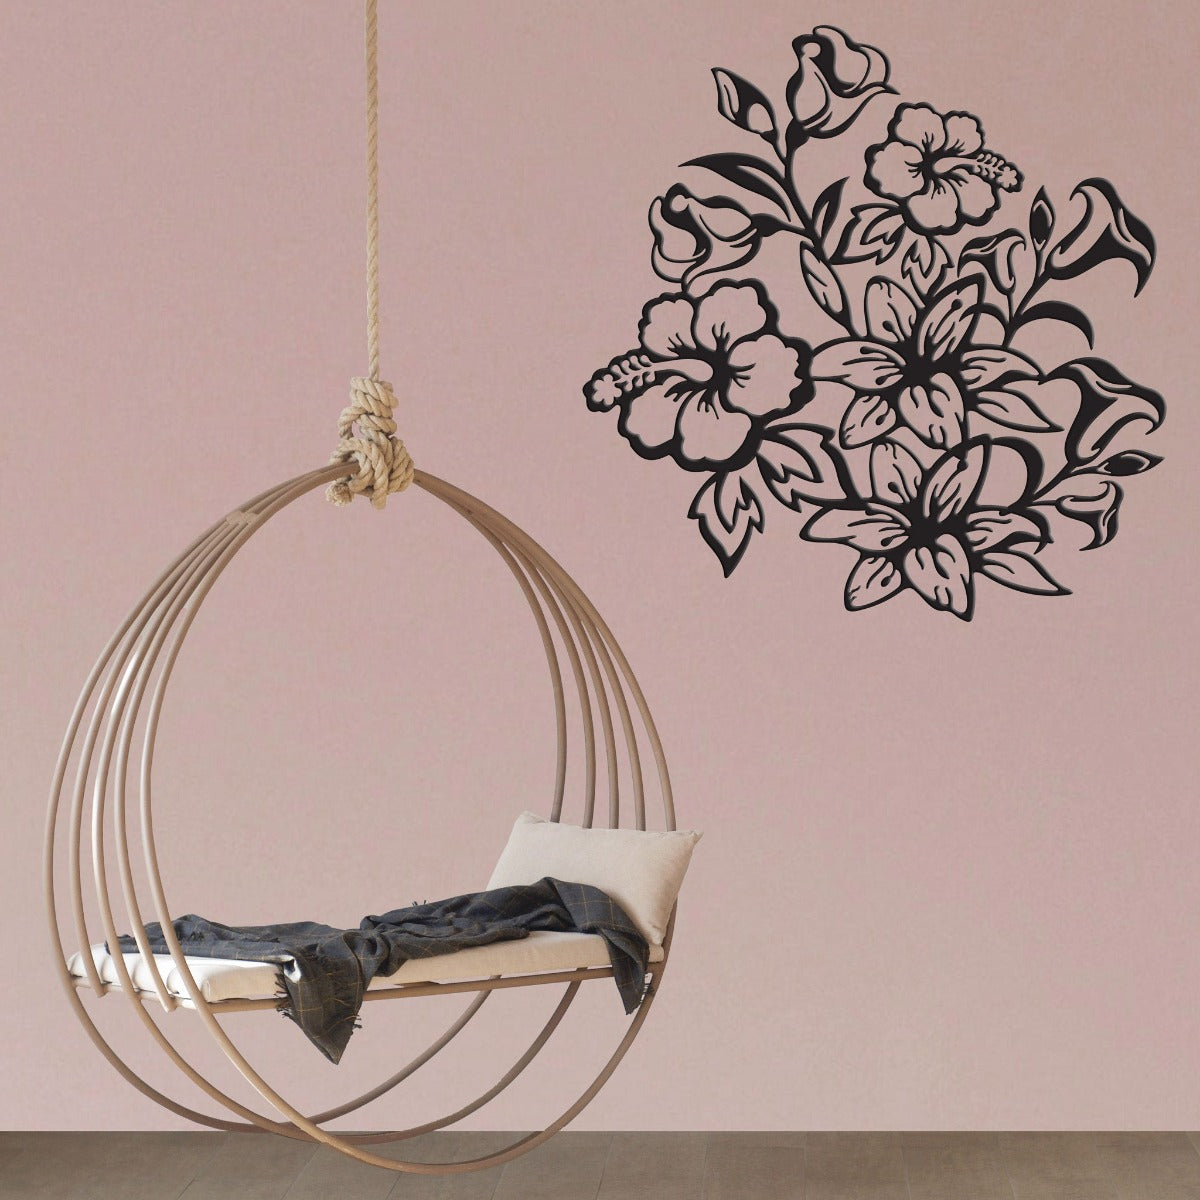 The Flower Bed  - Metal Art